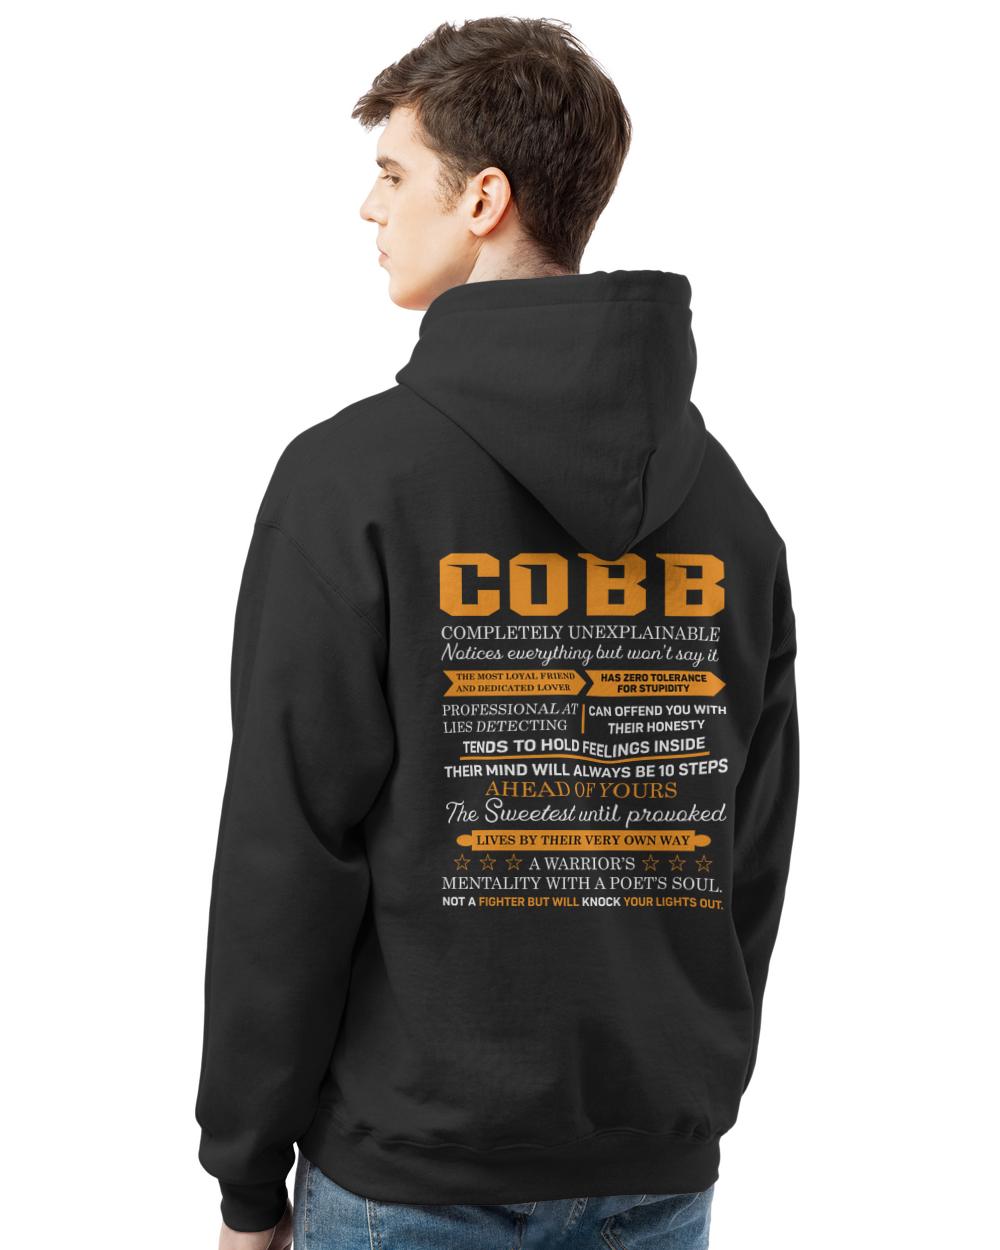 COBB-13K-N1-01